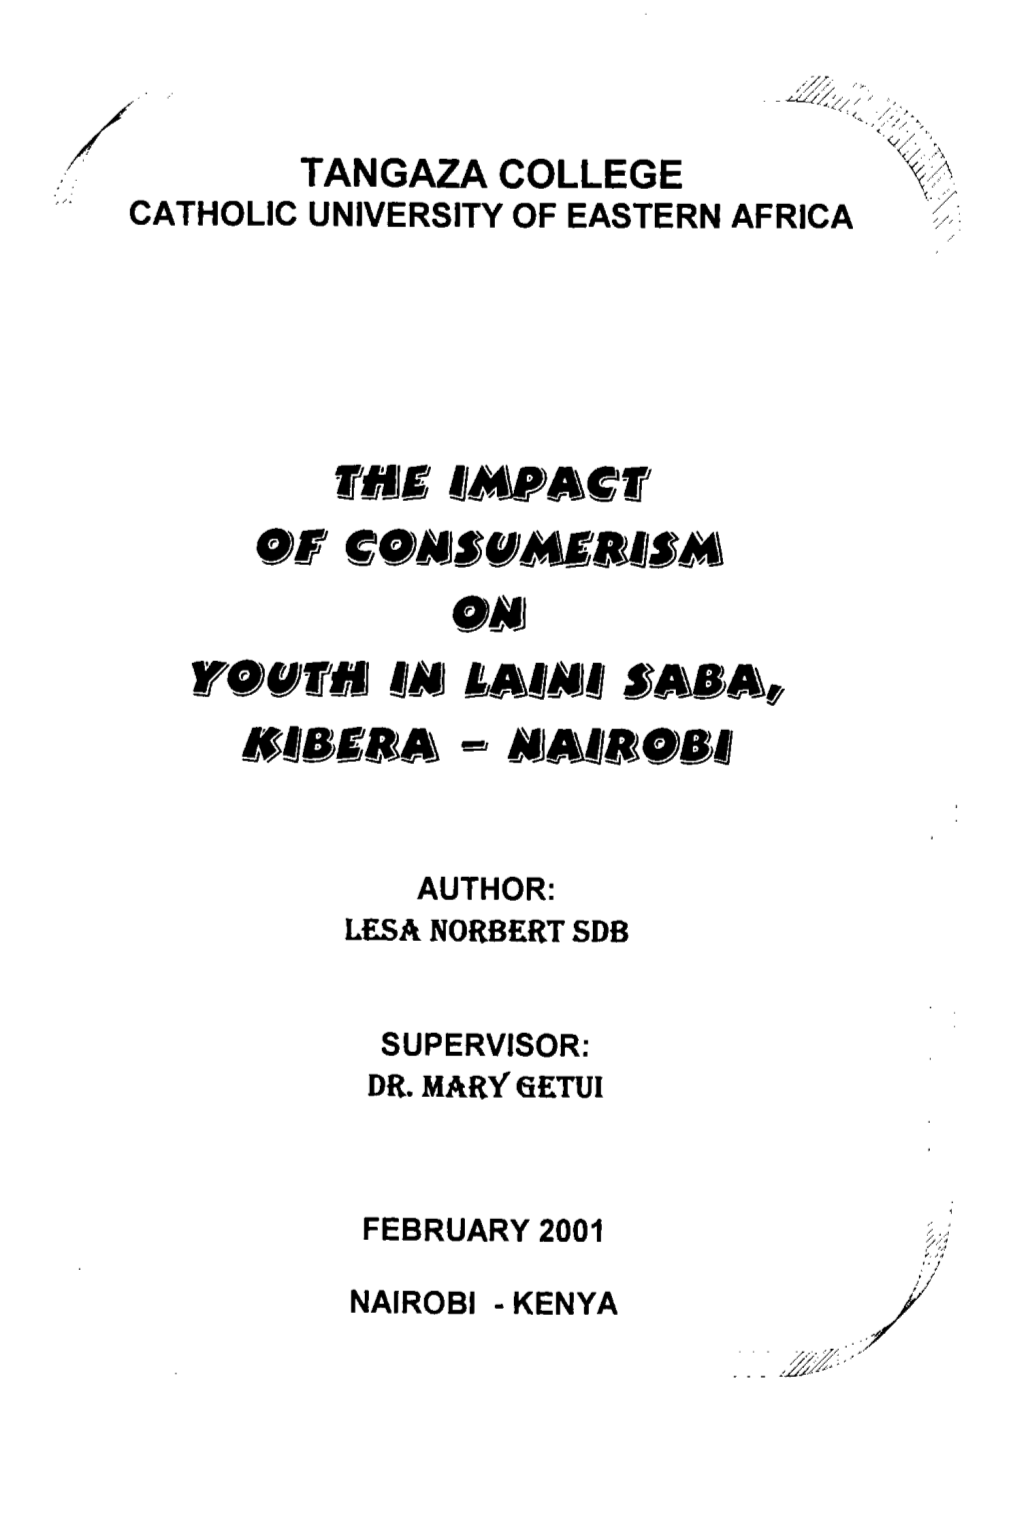 The Impact of Consumerism on Youth in Laini Saba Kibera-Nairobi